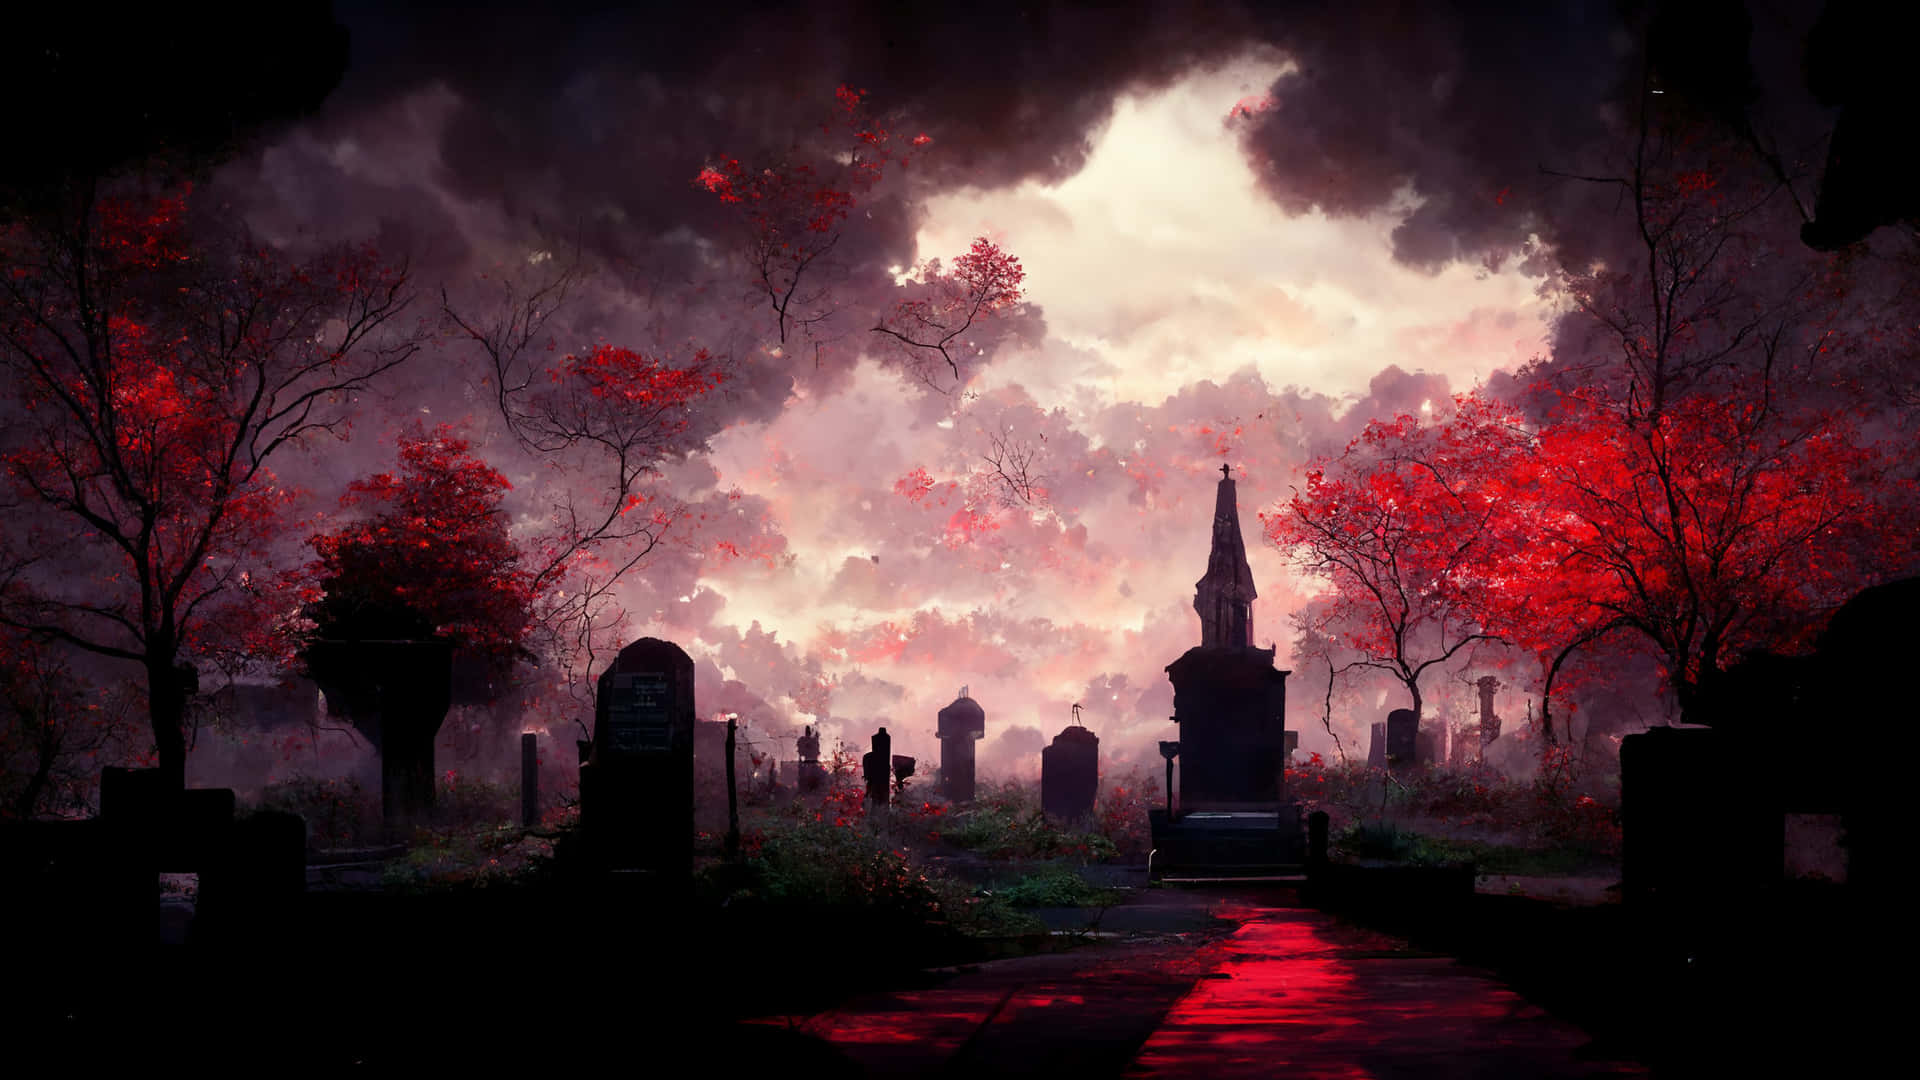 Creepy Gothic Cemetery 4 by ObsidianPlanet on DeviantArt